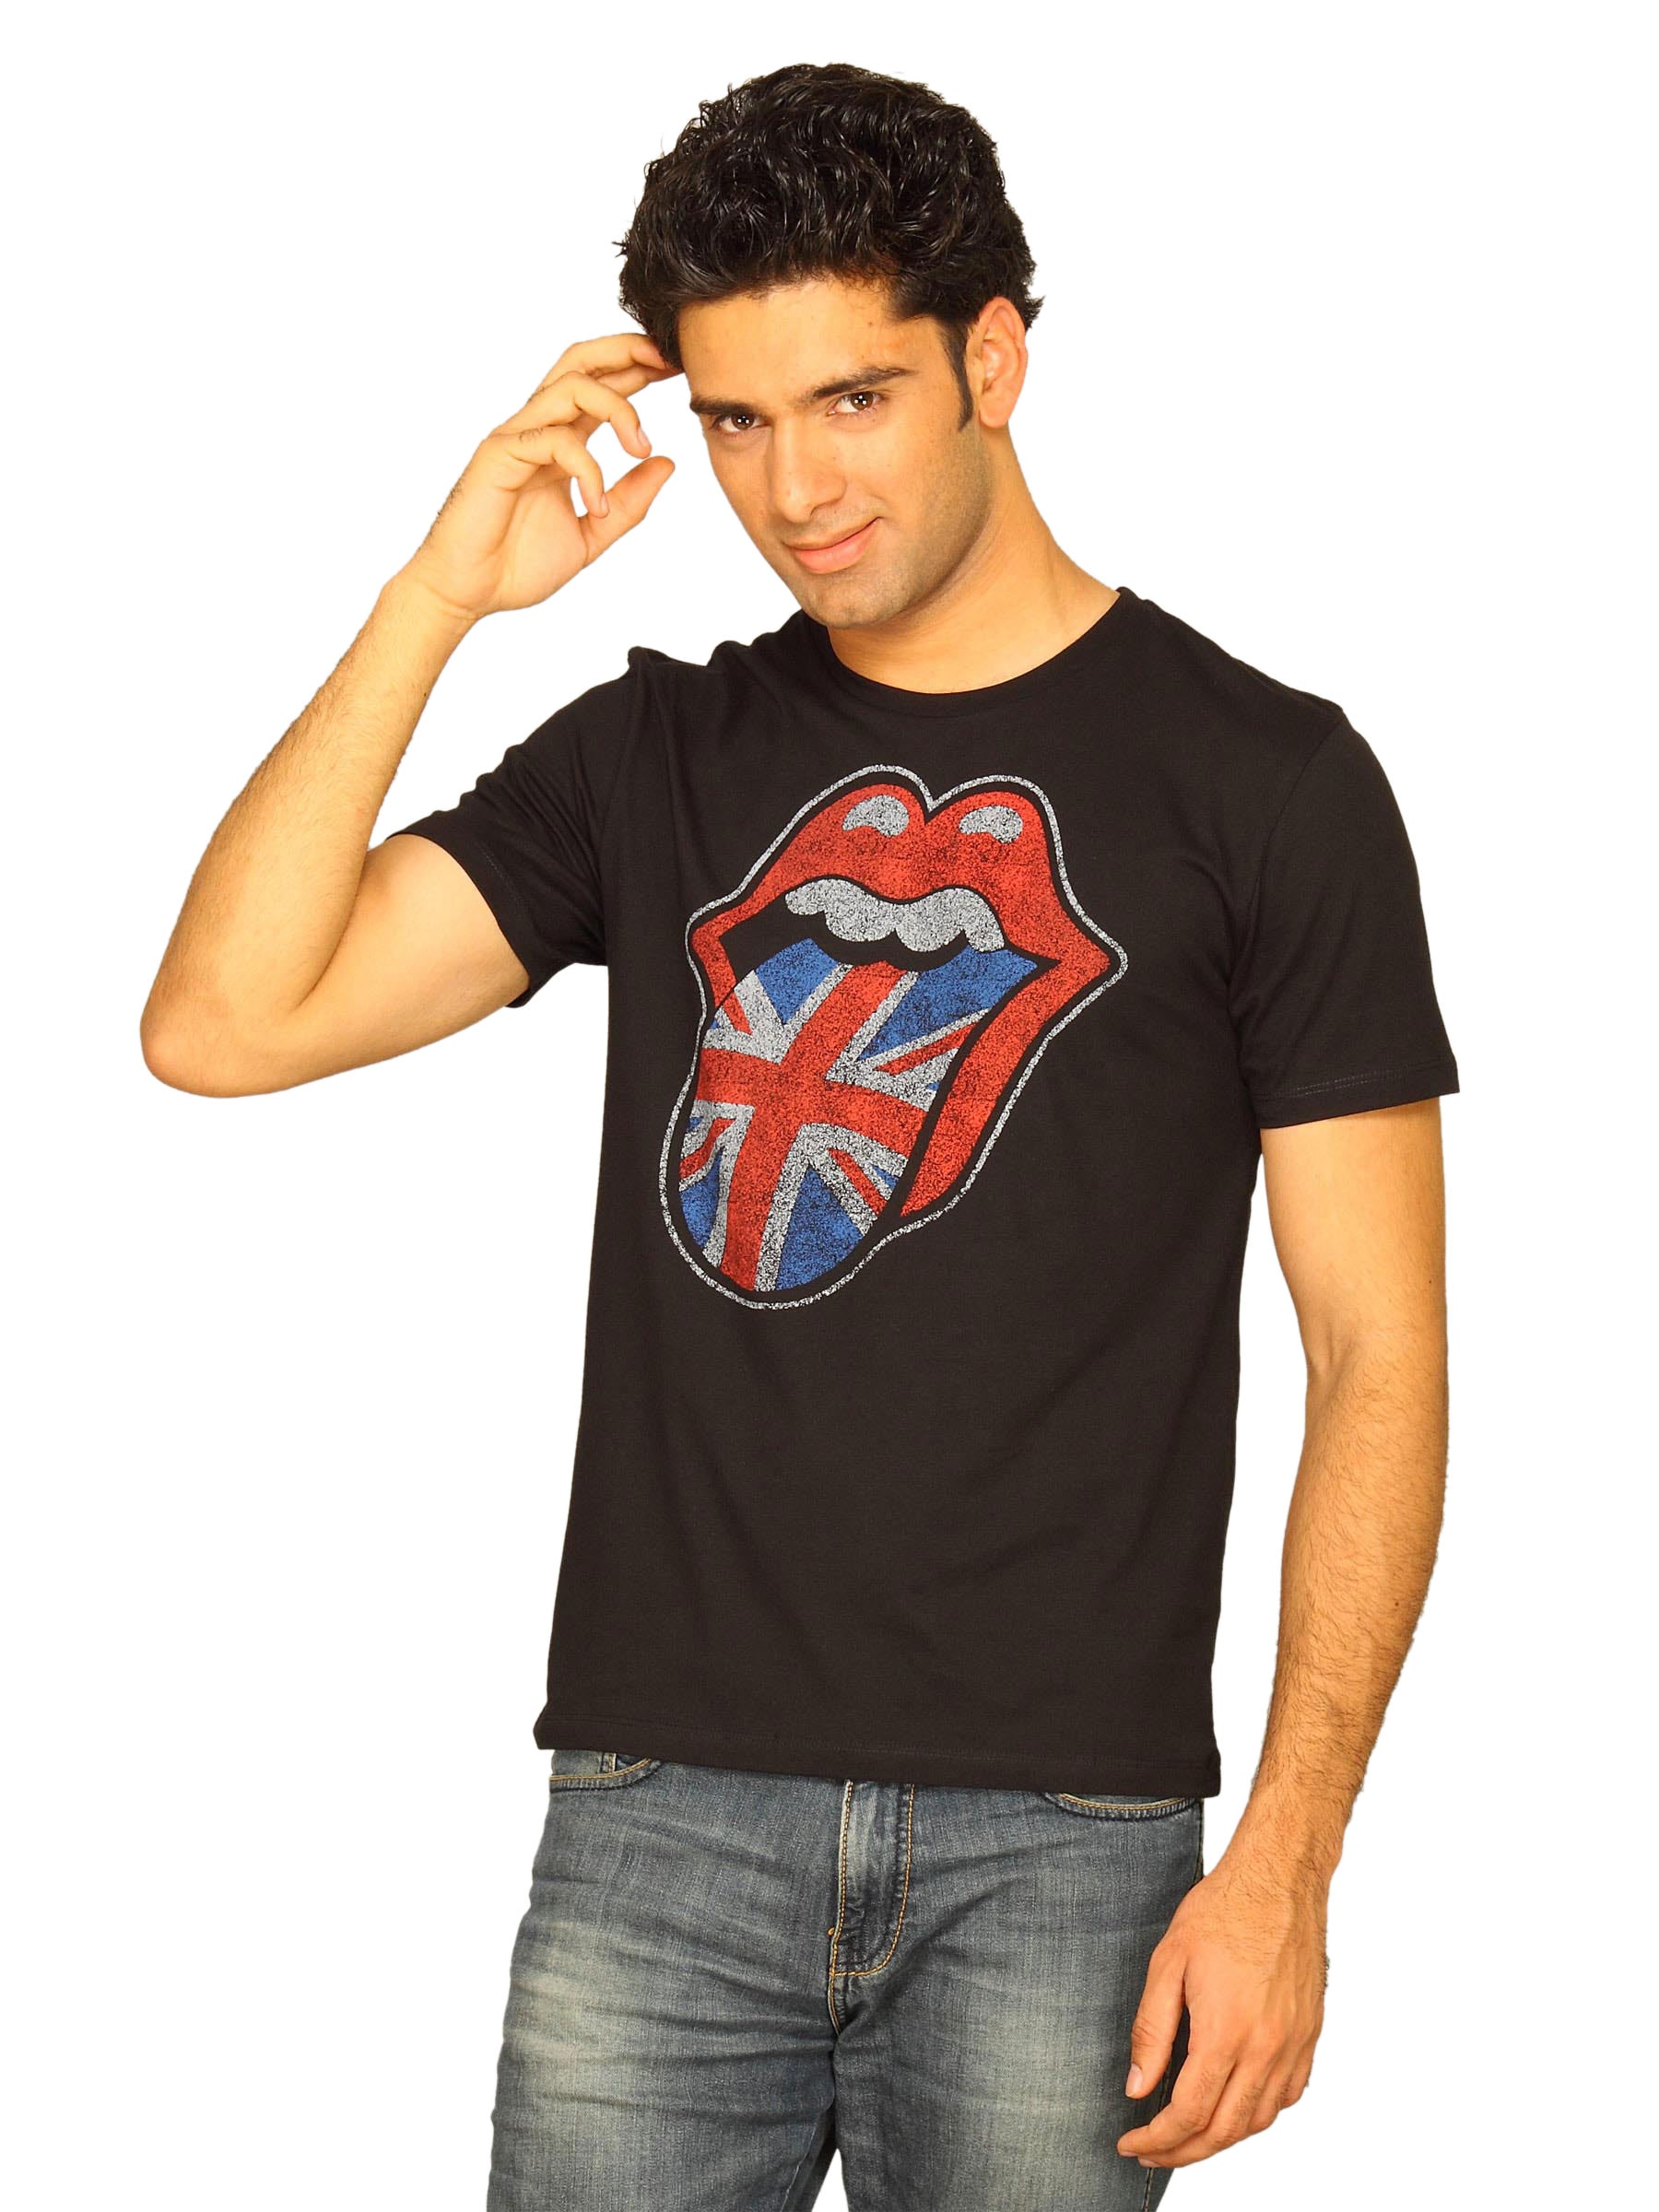 Rolling Stone Men's Union Jack Black T-shirt